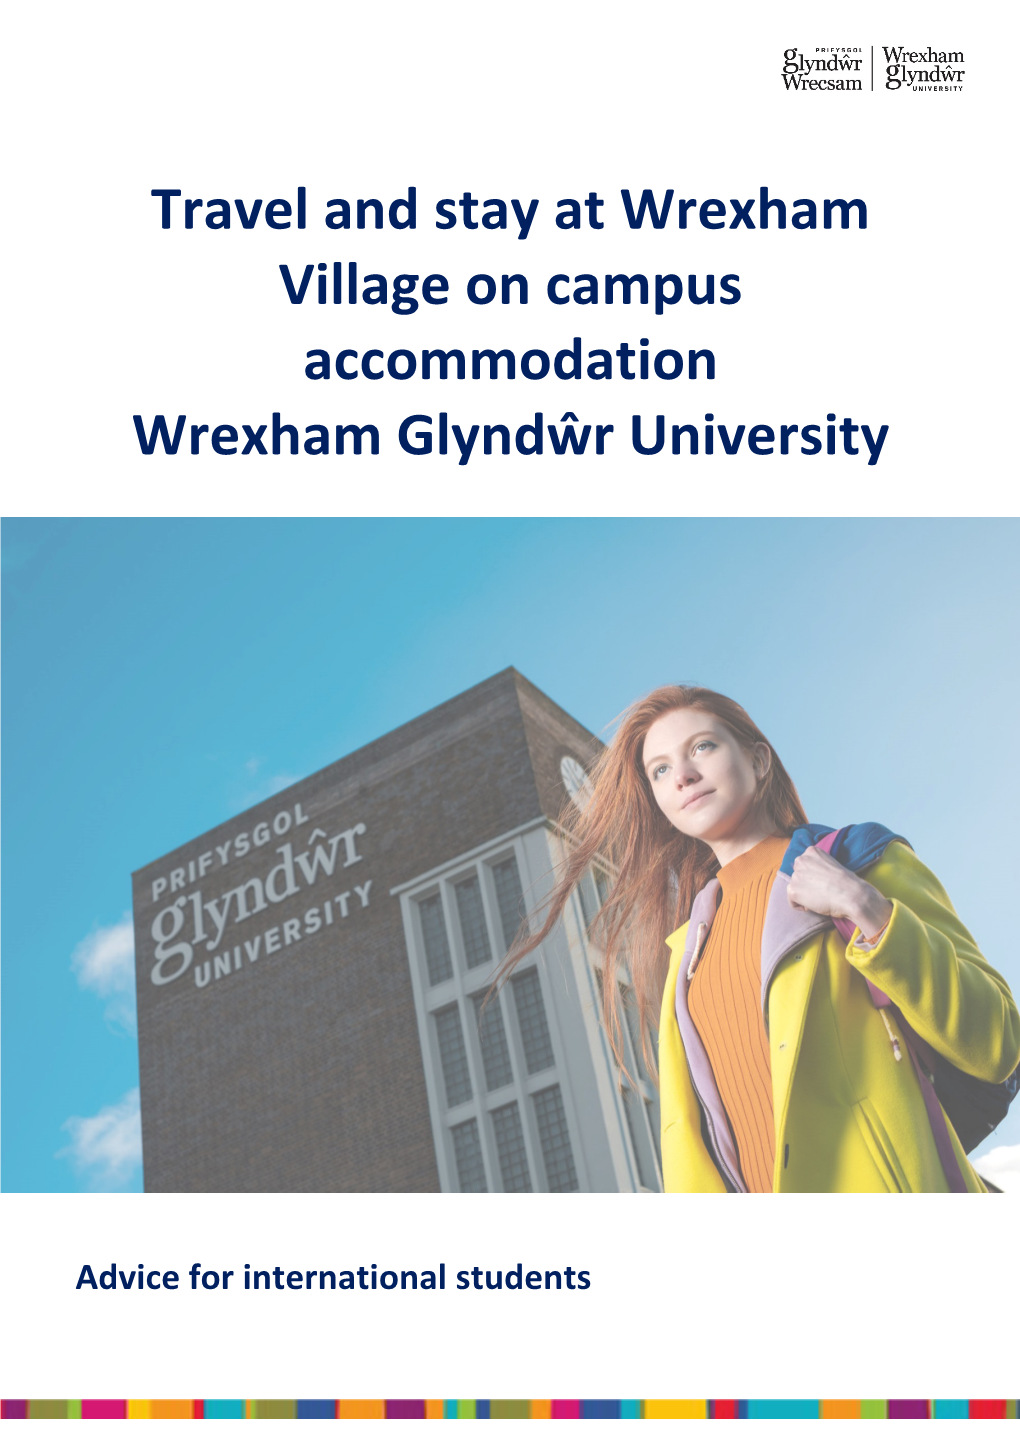 Travel and Stay at Wrexham Village on Campus Accommodation Wrexham Glyndŵr University